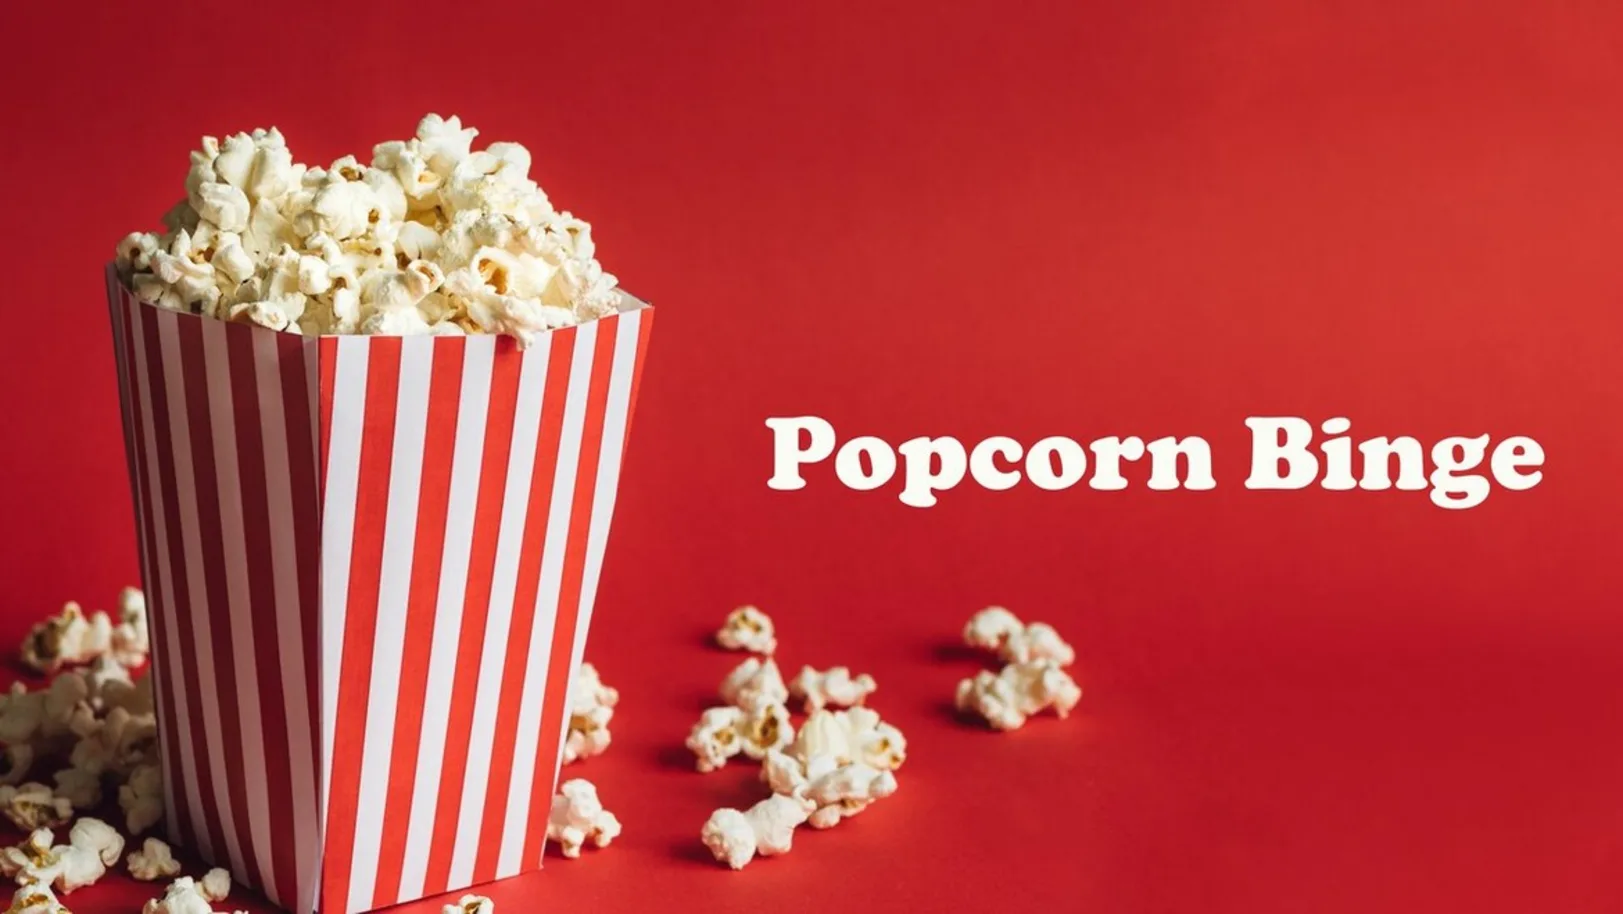 Popcorn Binge Streaming Now On Zing